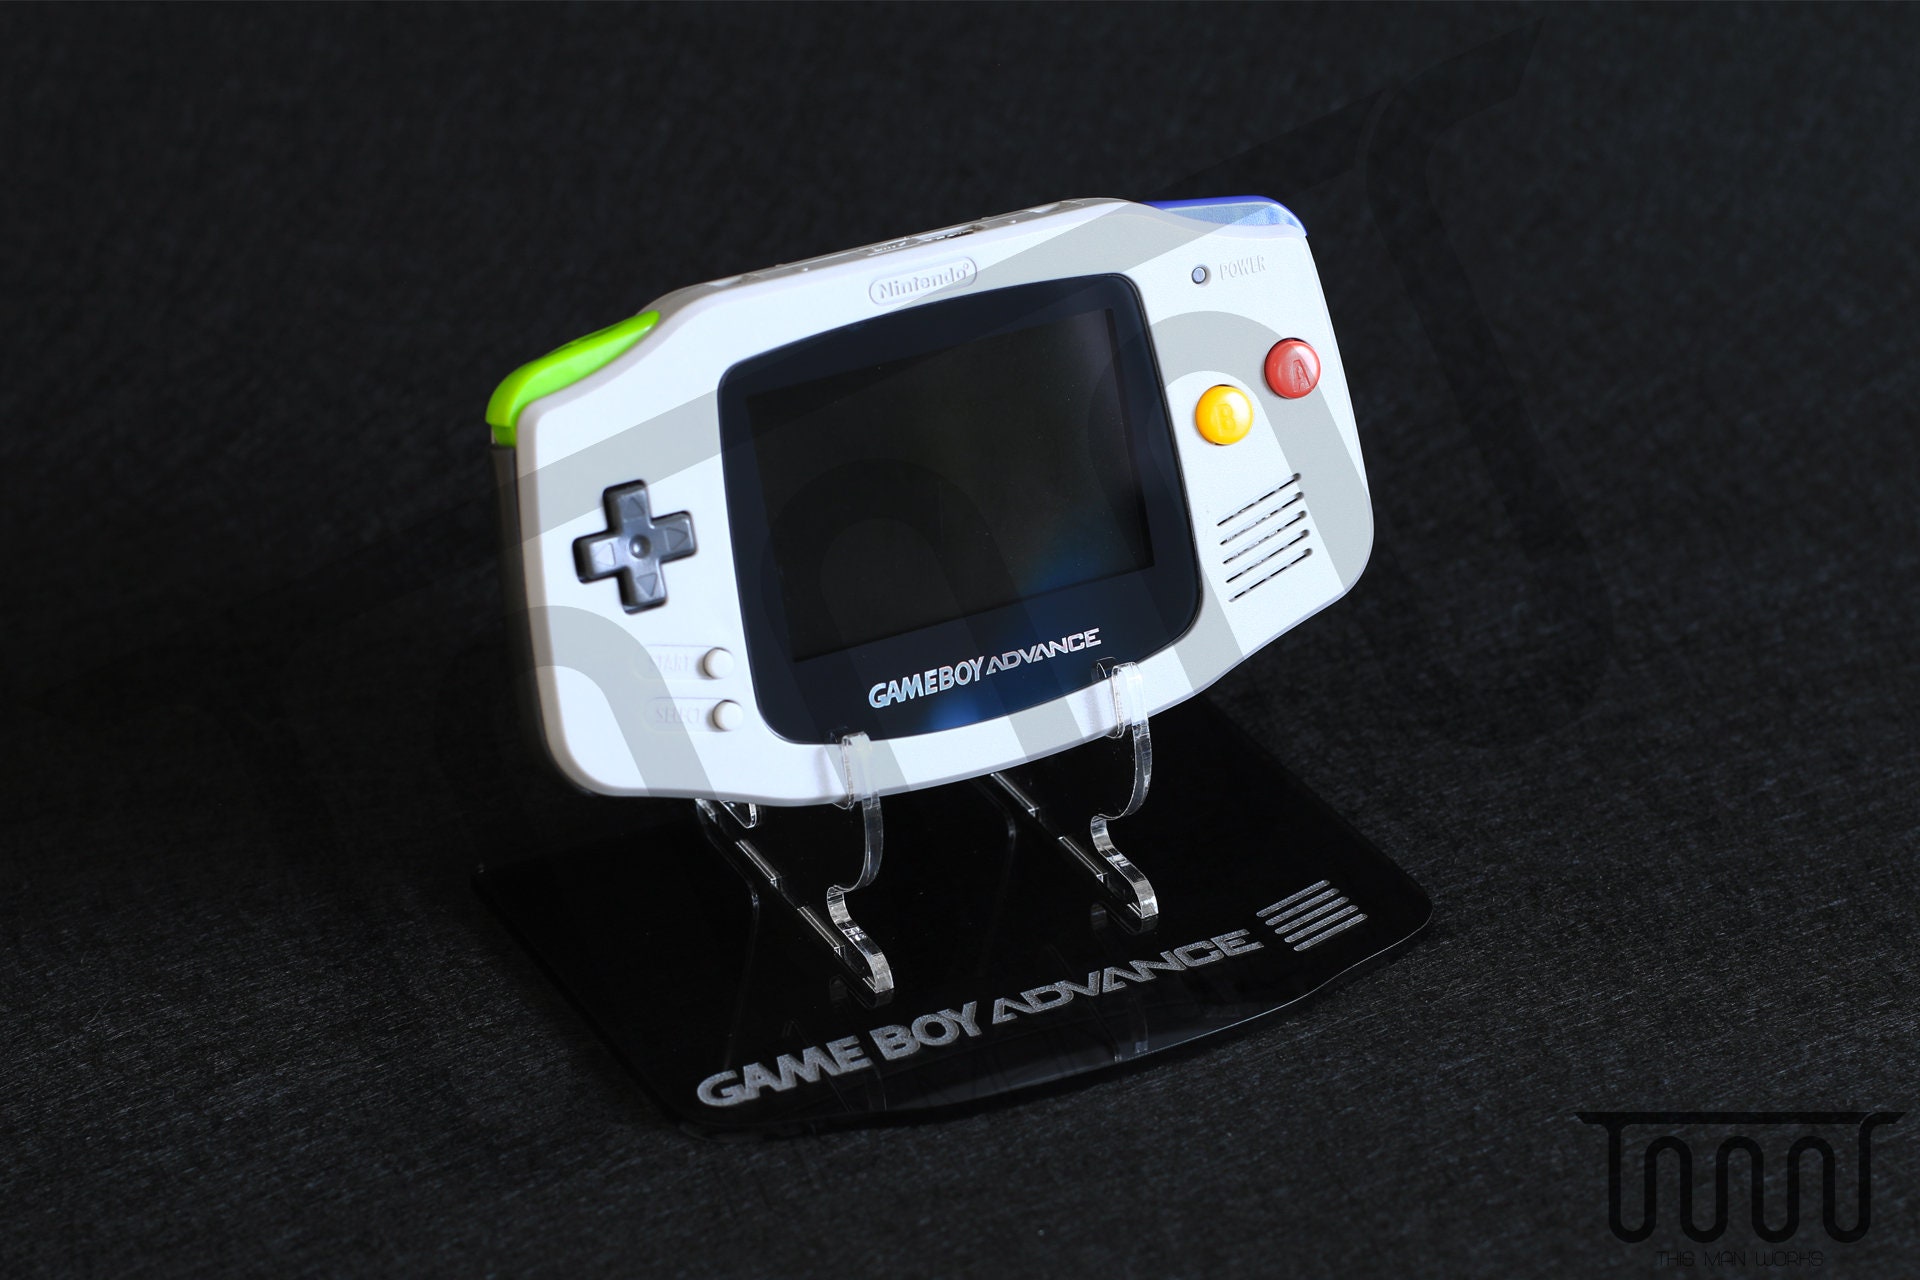 Pokemon Mega Power (Gameboy Advance GBA) Custom Fan made Hack